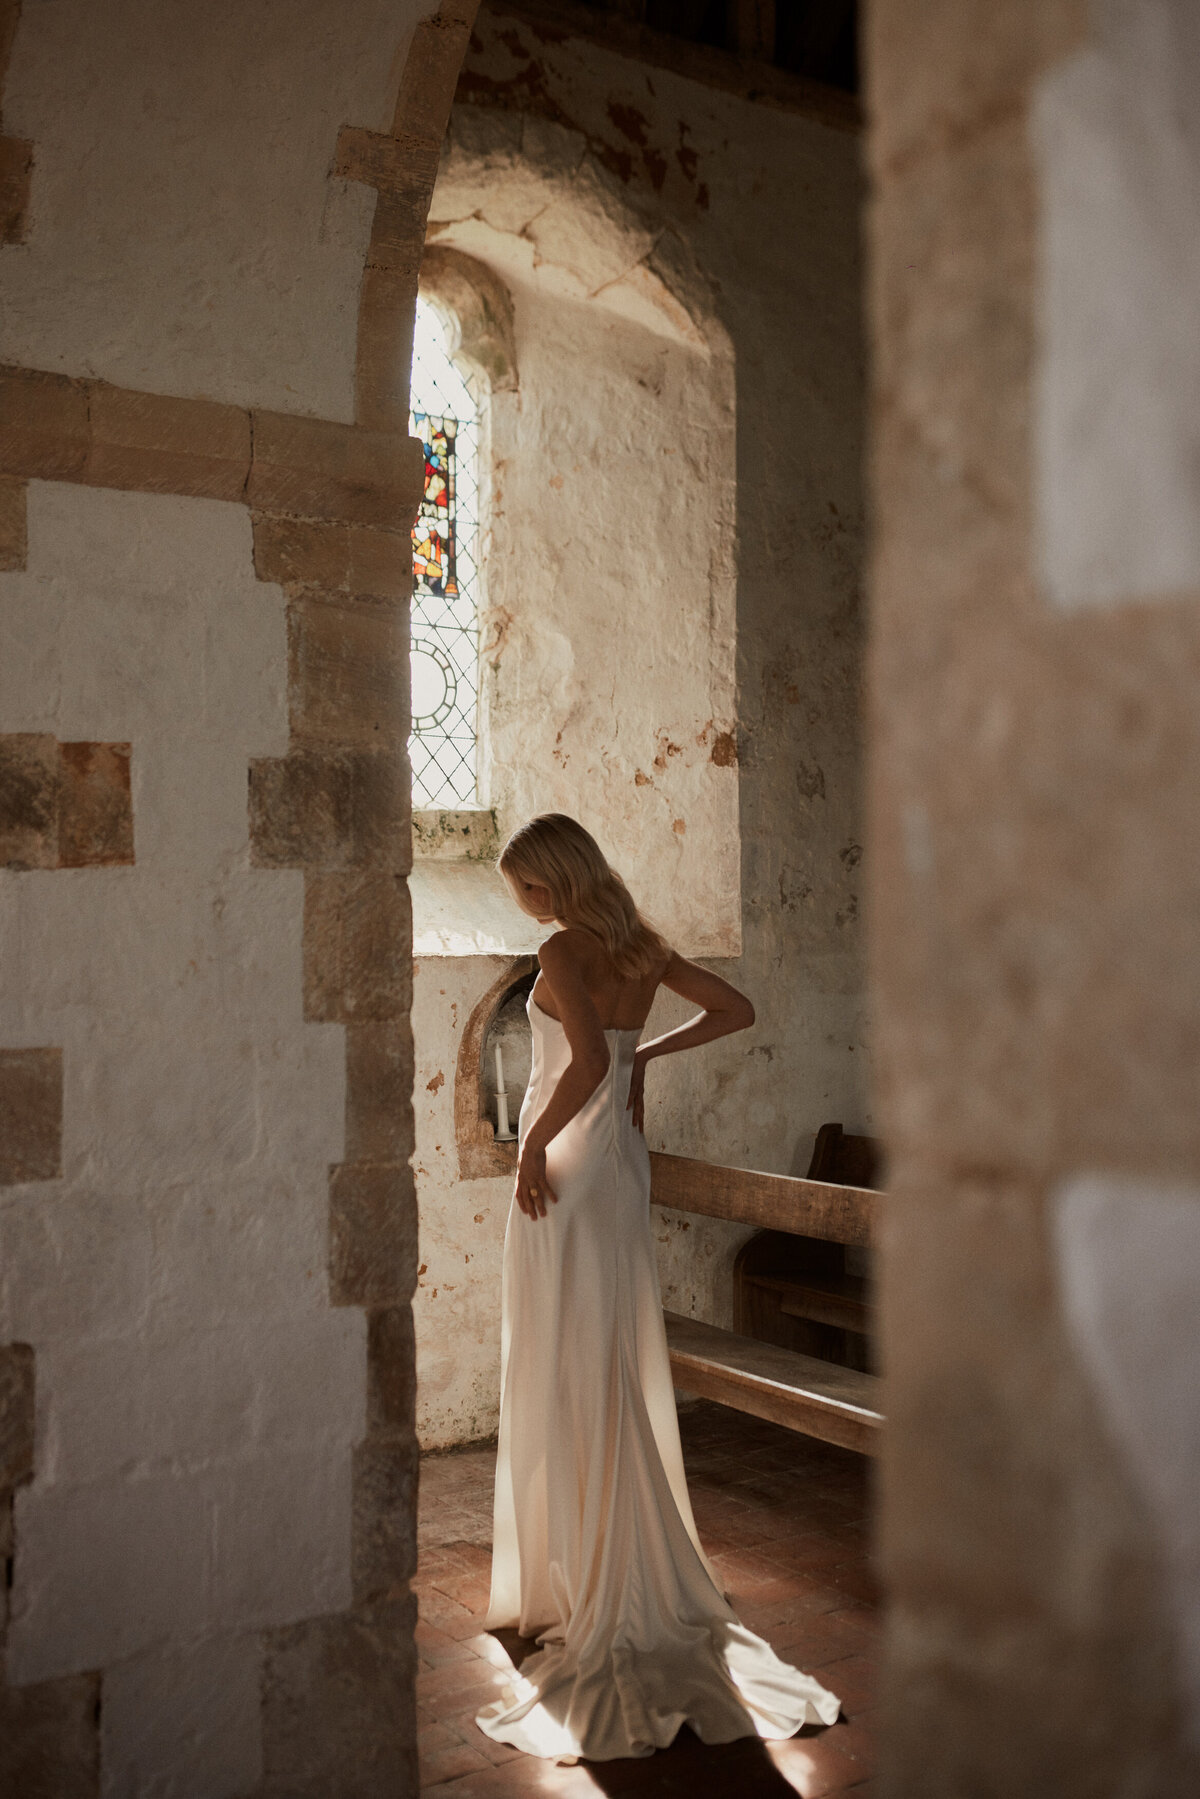 Handmade silk wedding dress, sleeveless, long dress worn by bride in chapel